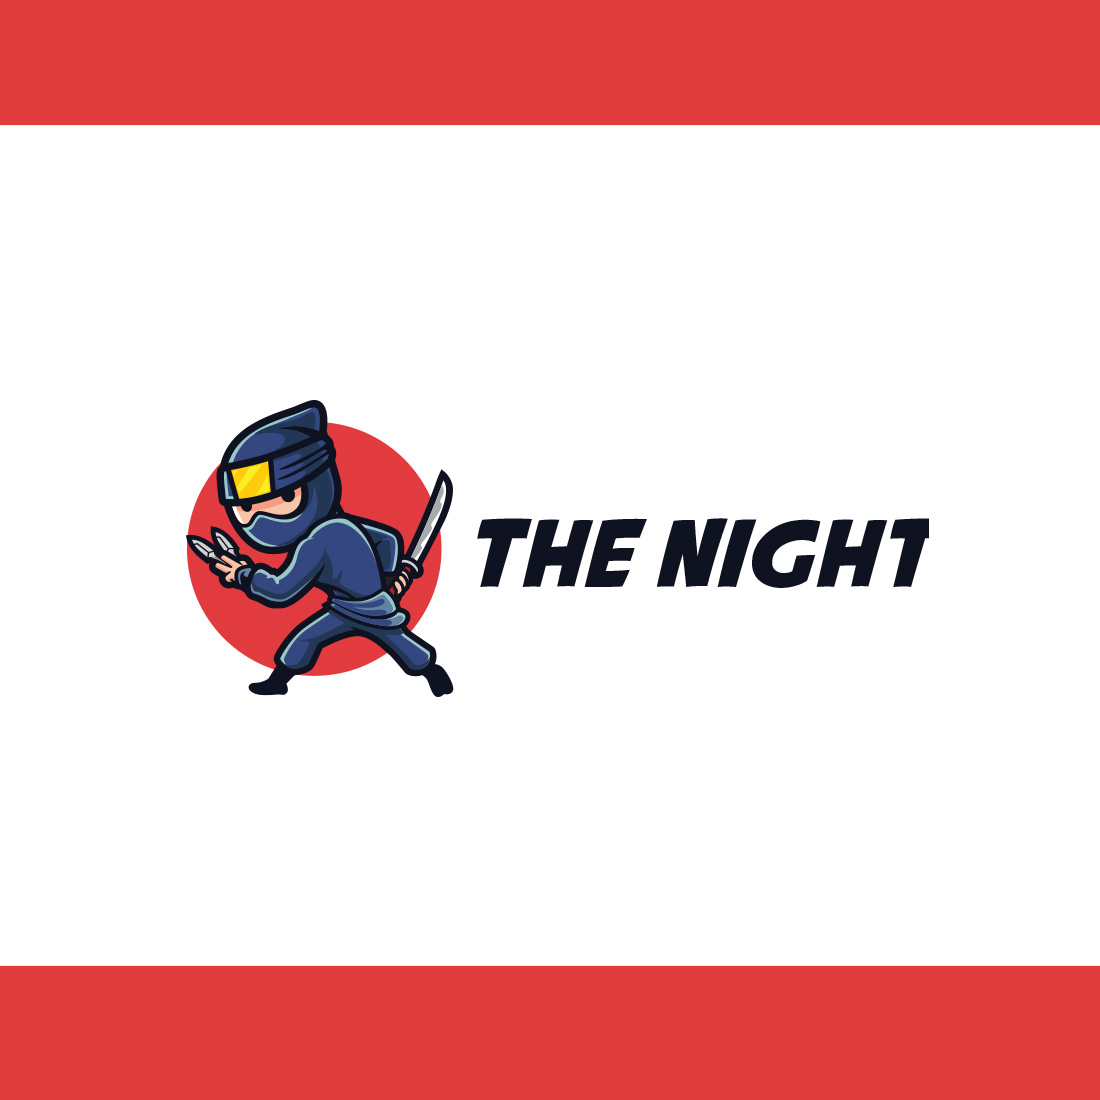 Night Ninja Cartoon Mascot Logo Design cover image.